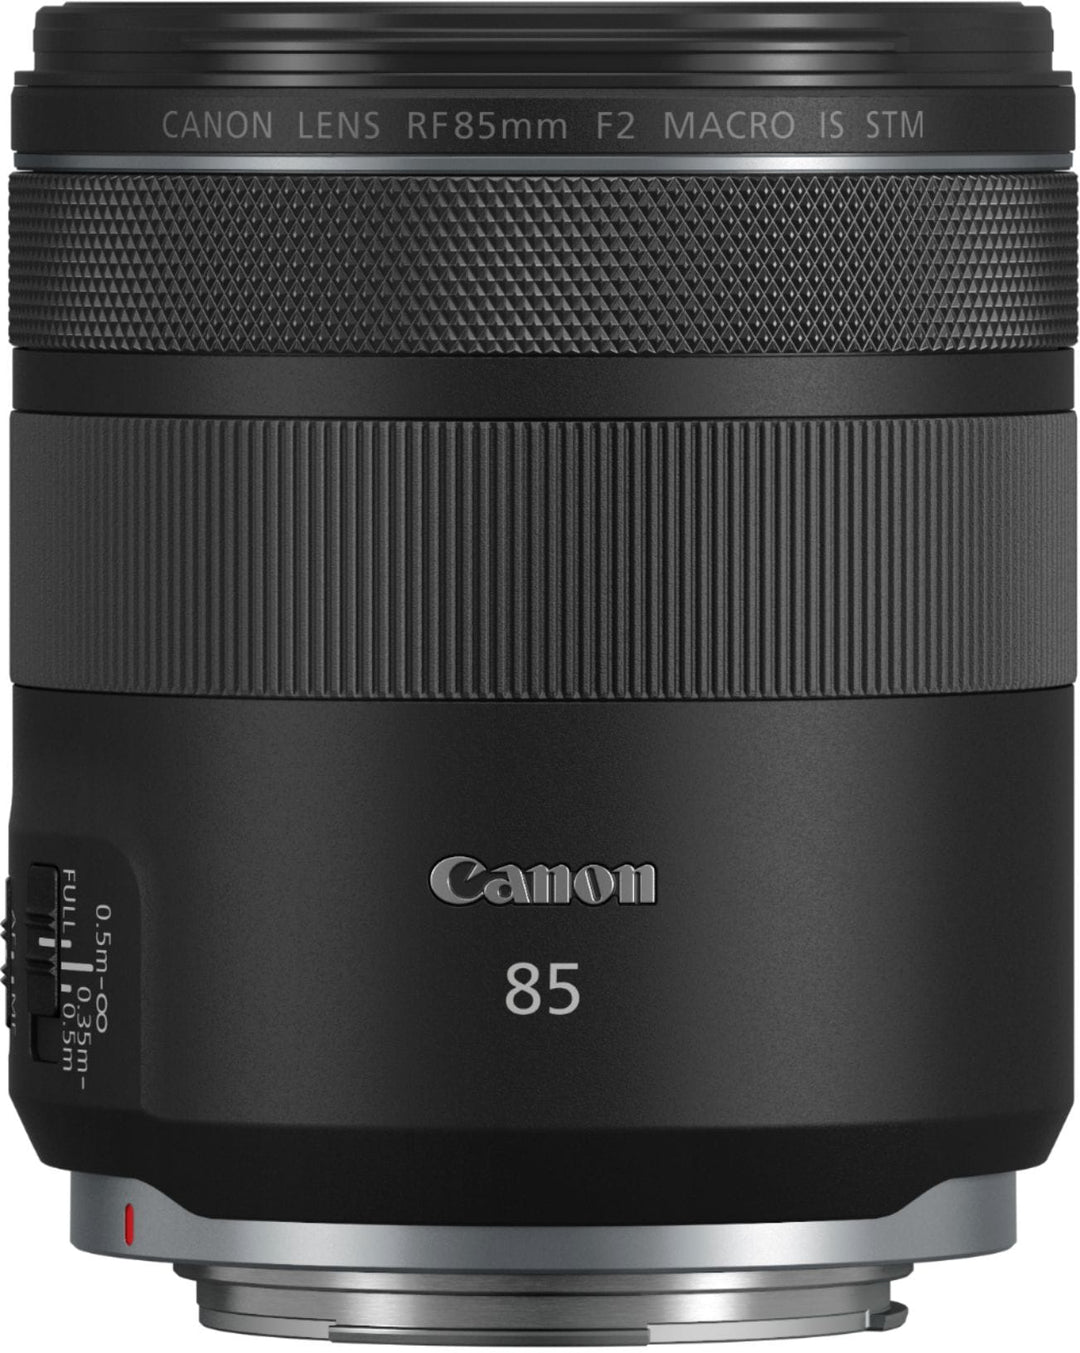 Canon - RF 85mm f/2 Macro IS STM Medium Telephoto Lens for EOS R Cameras - Black_2